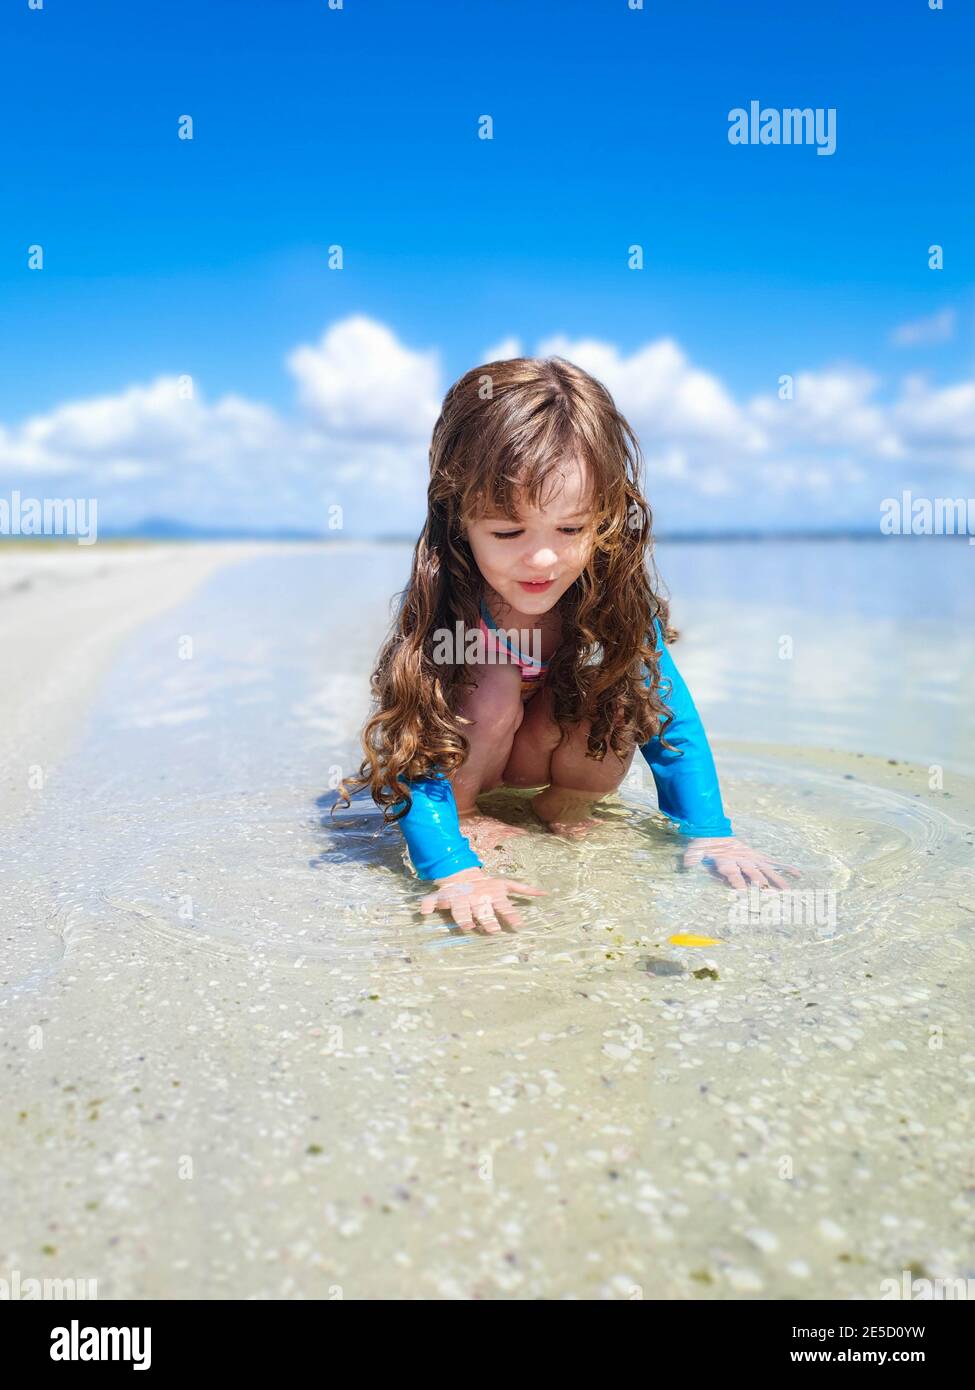 Girl playing in shallow water on beach, Rio de Janeiro, Brazil Stock Photo